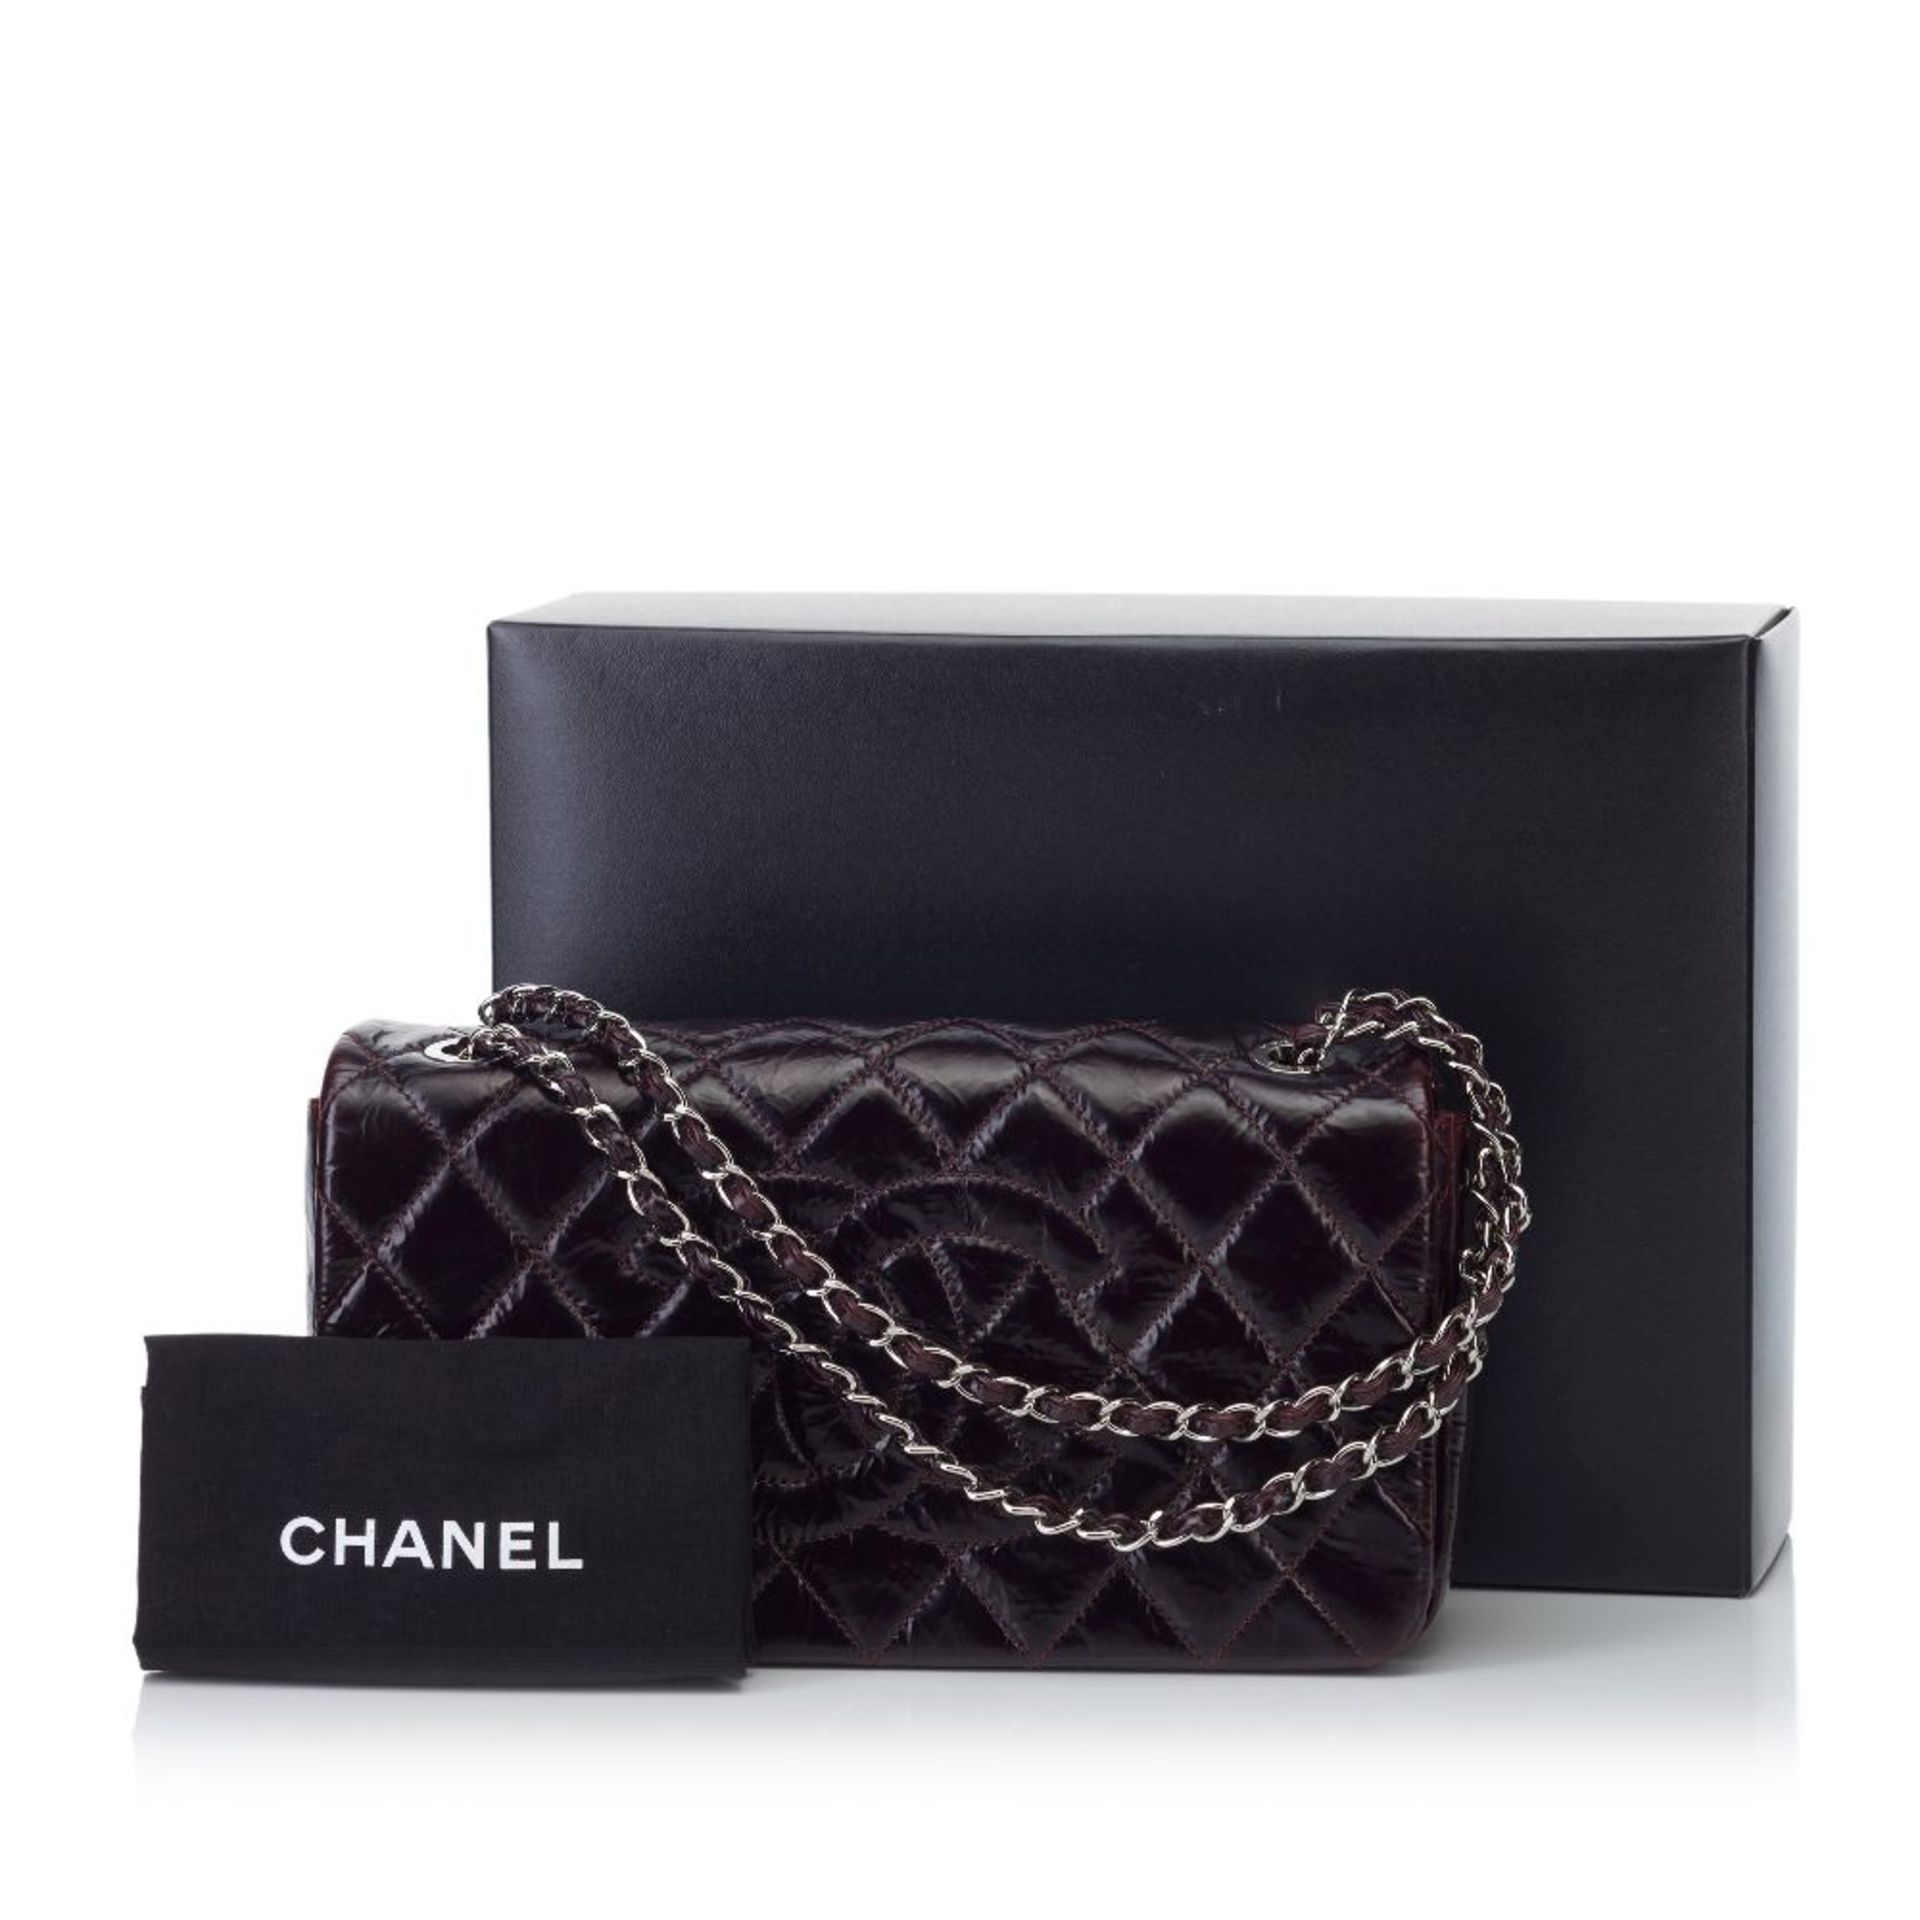 A Chanel matelassé patent leather shoulder bag,a patent leather body, exterior back slip pocket, - Image 2 of 2